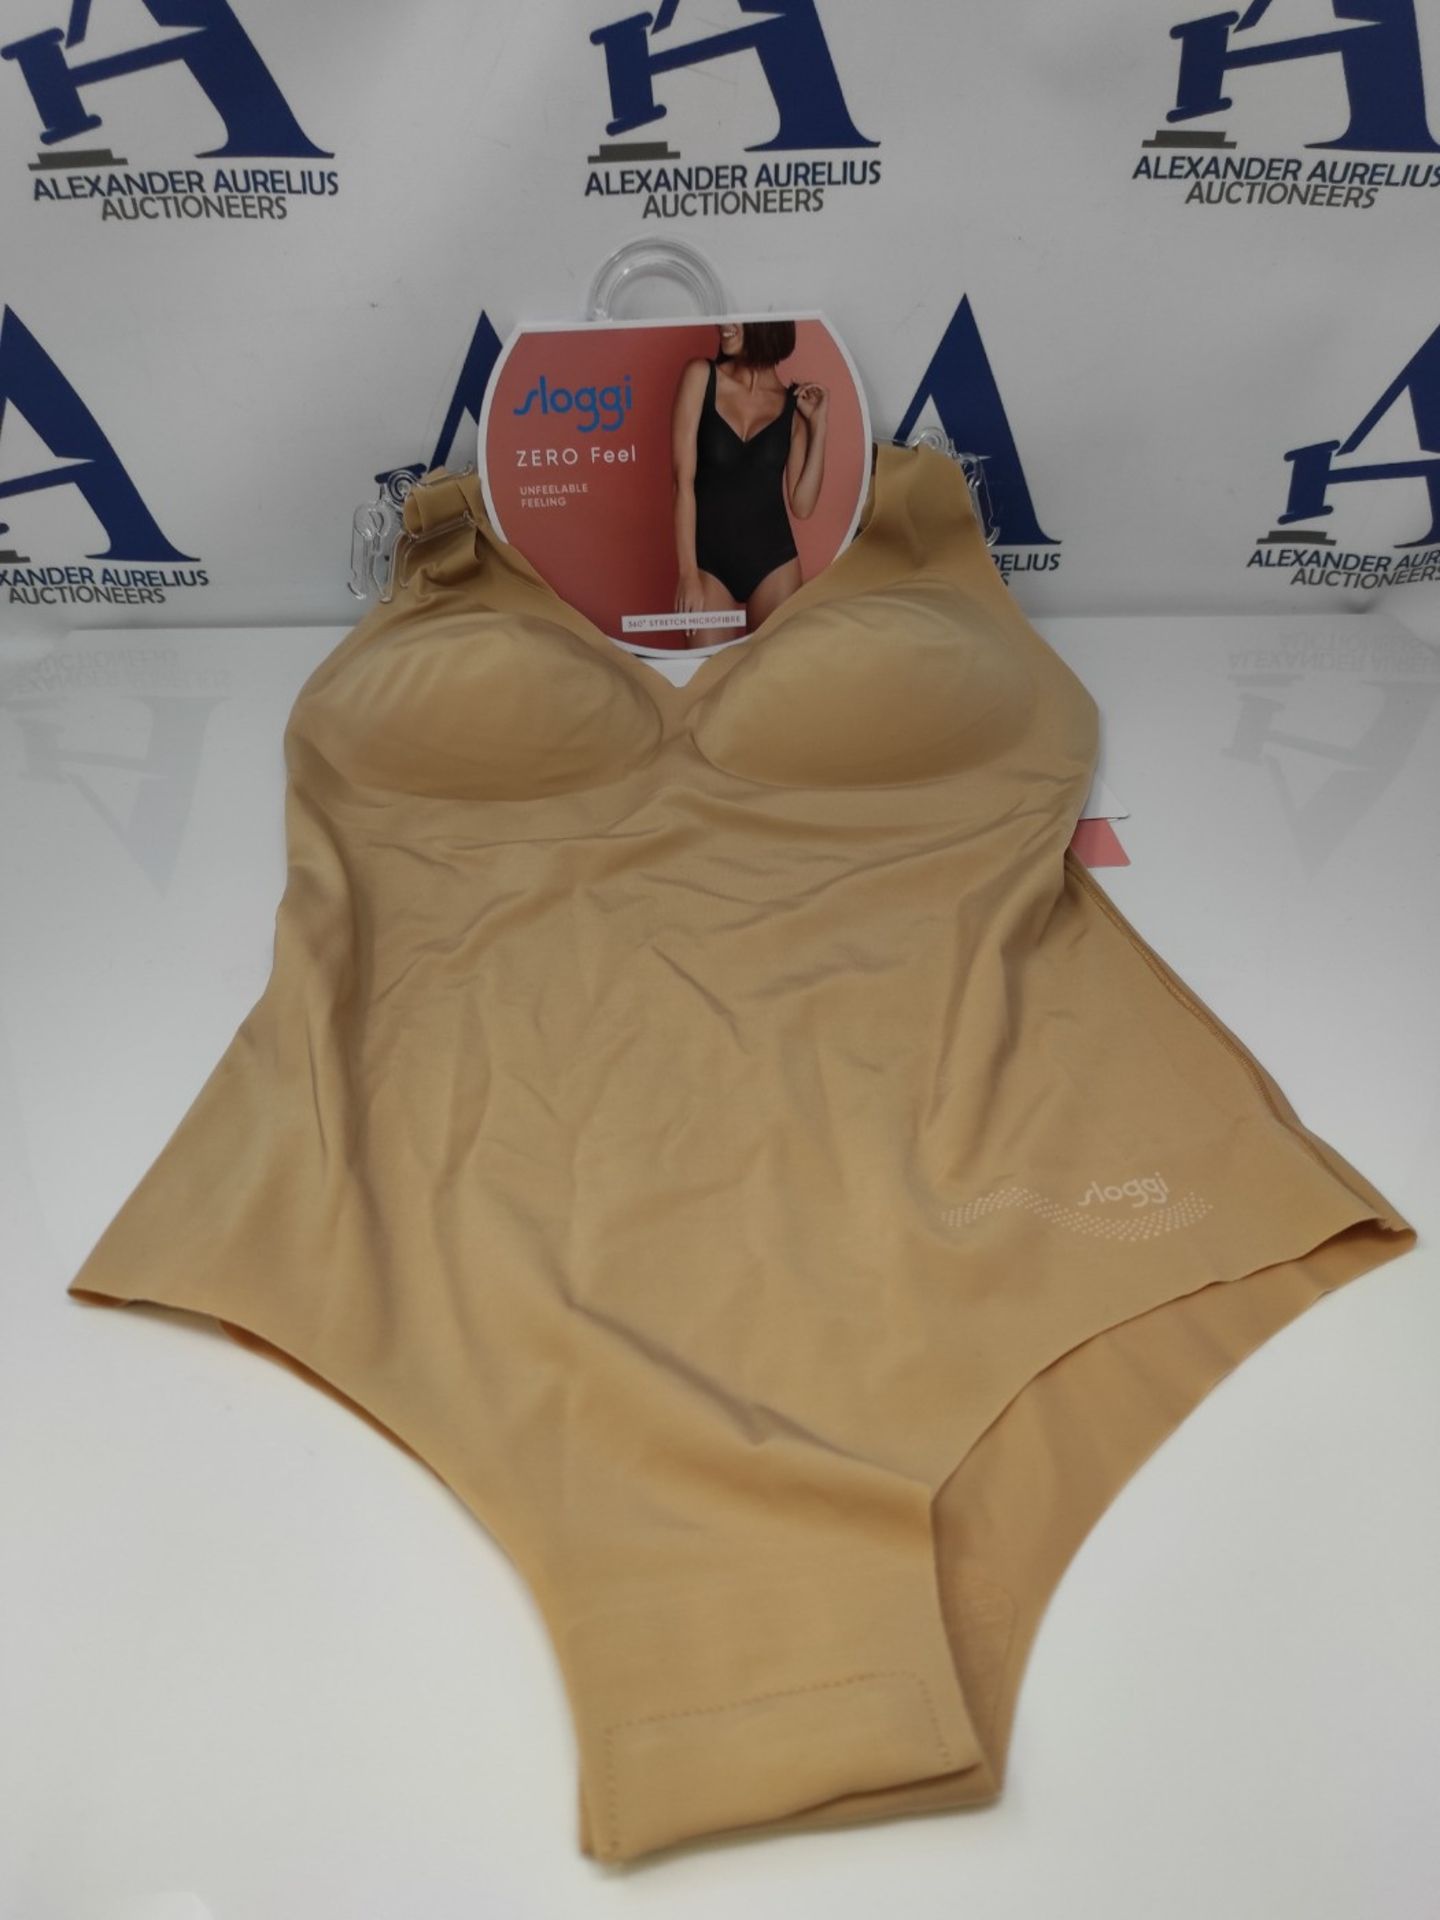 Sloggi Women's Zero Feel Body Ex Underwear Small - Image 2 of 3